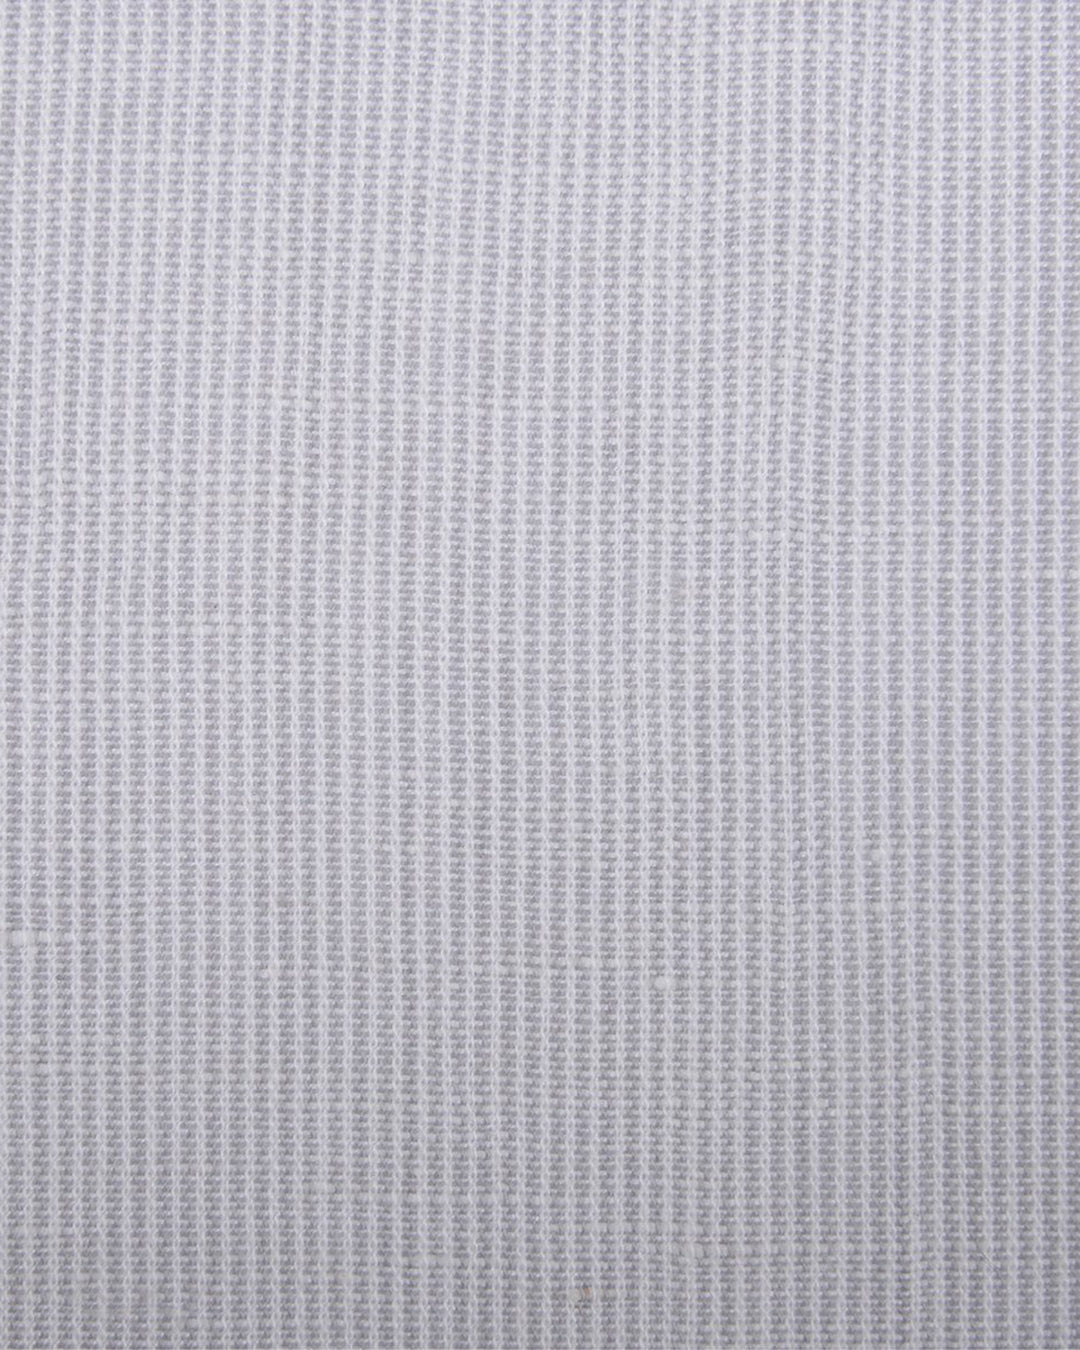 Cotton Linen: Grey Hairline Stripes On White